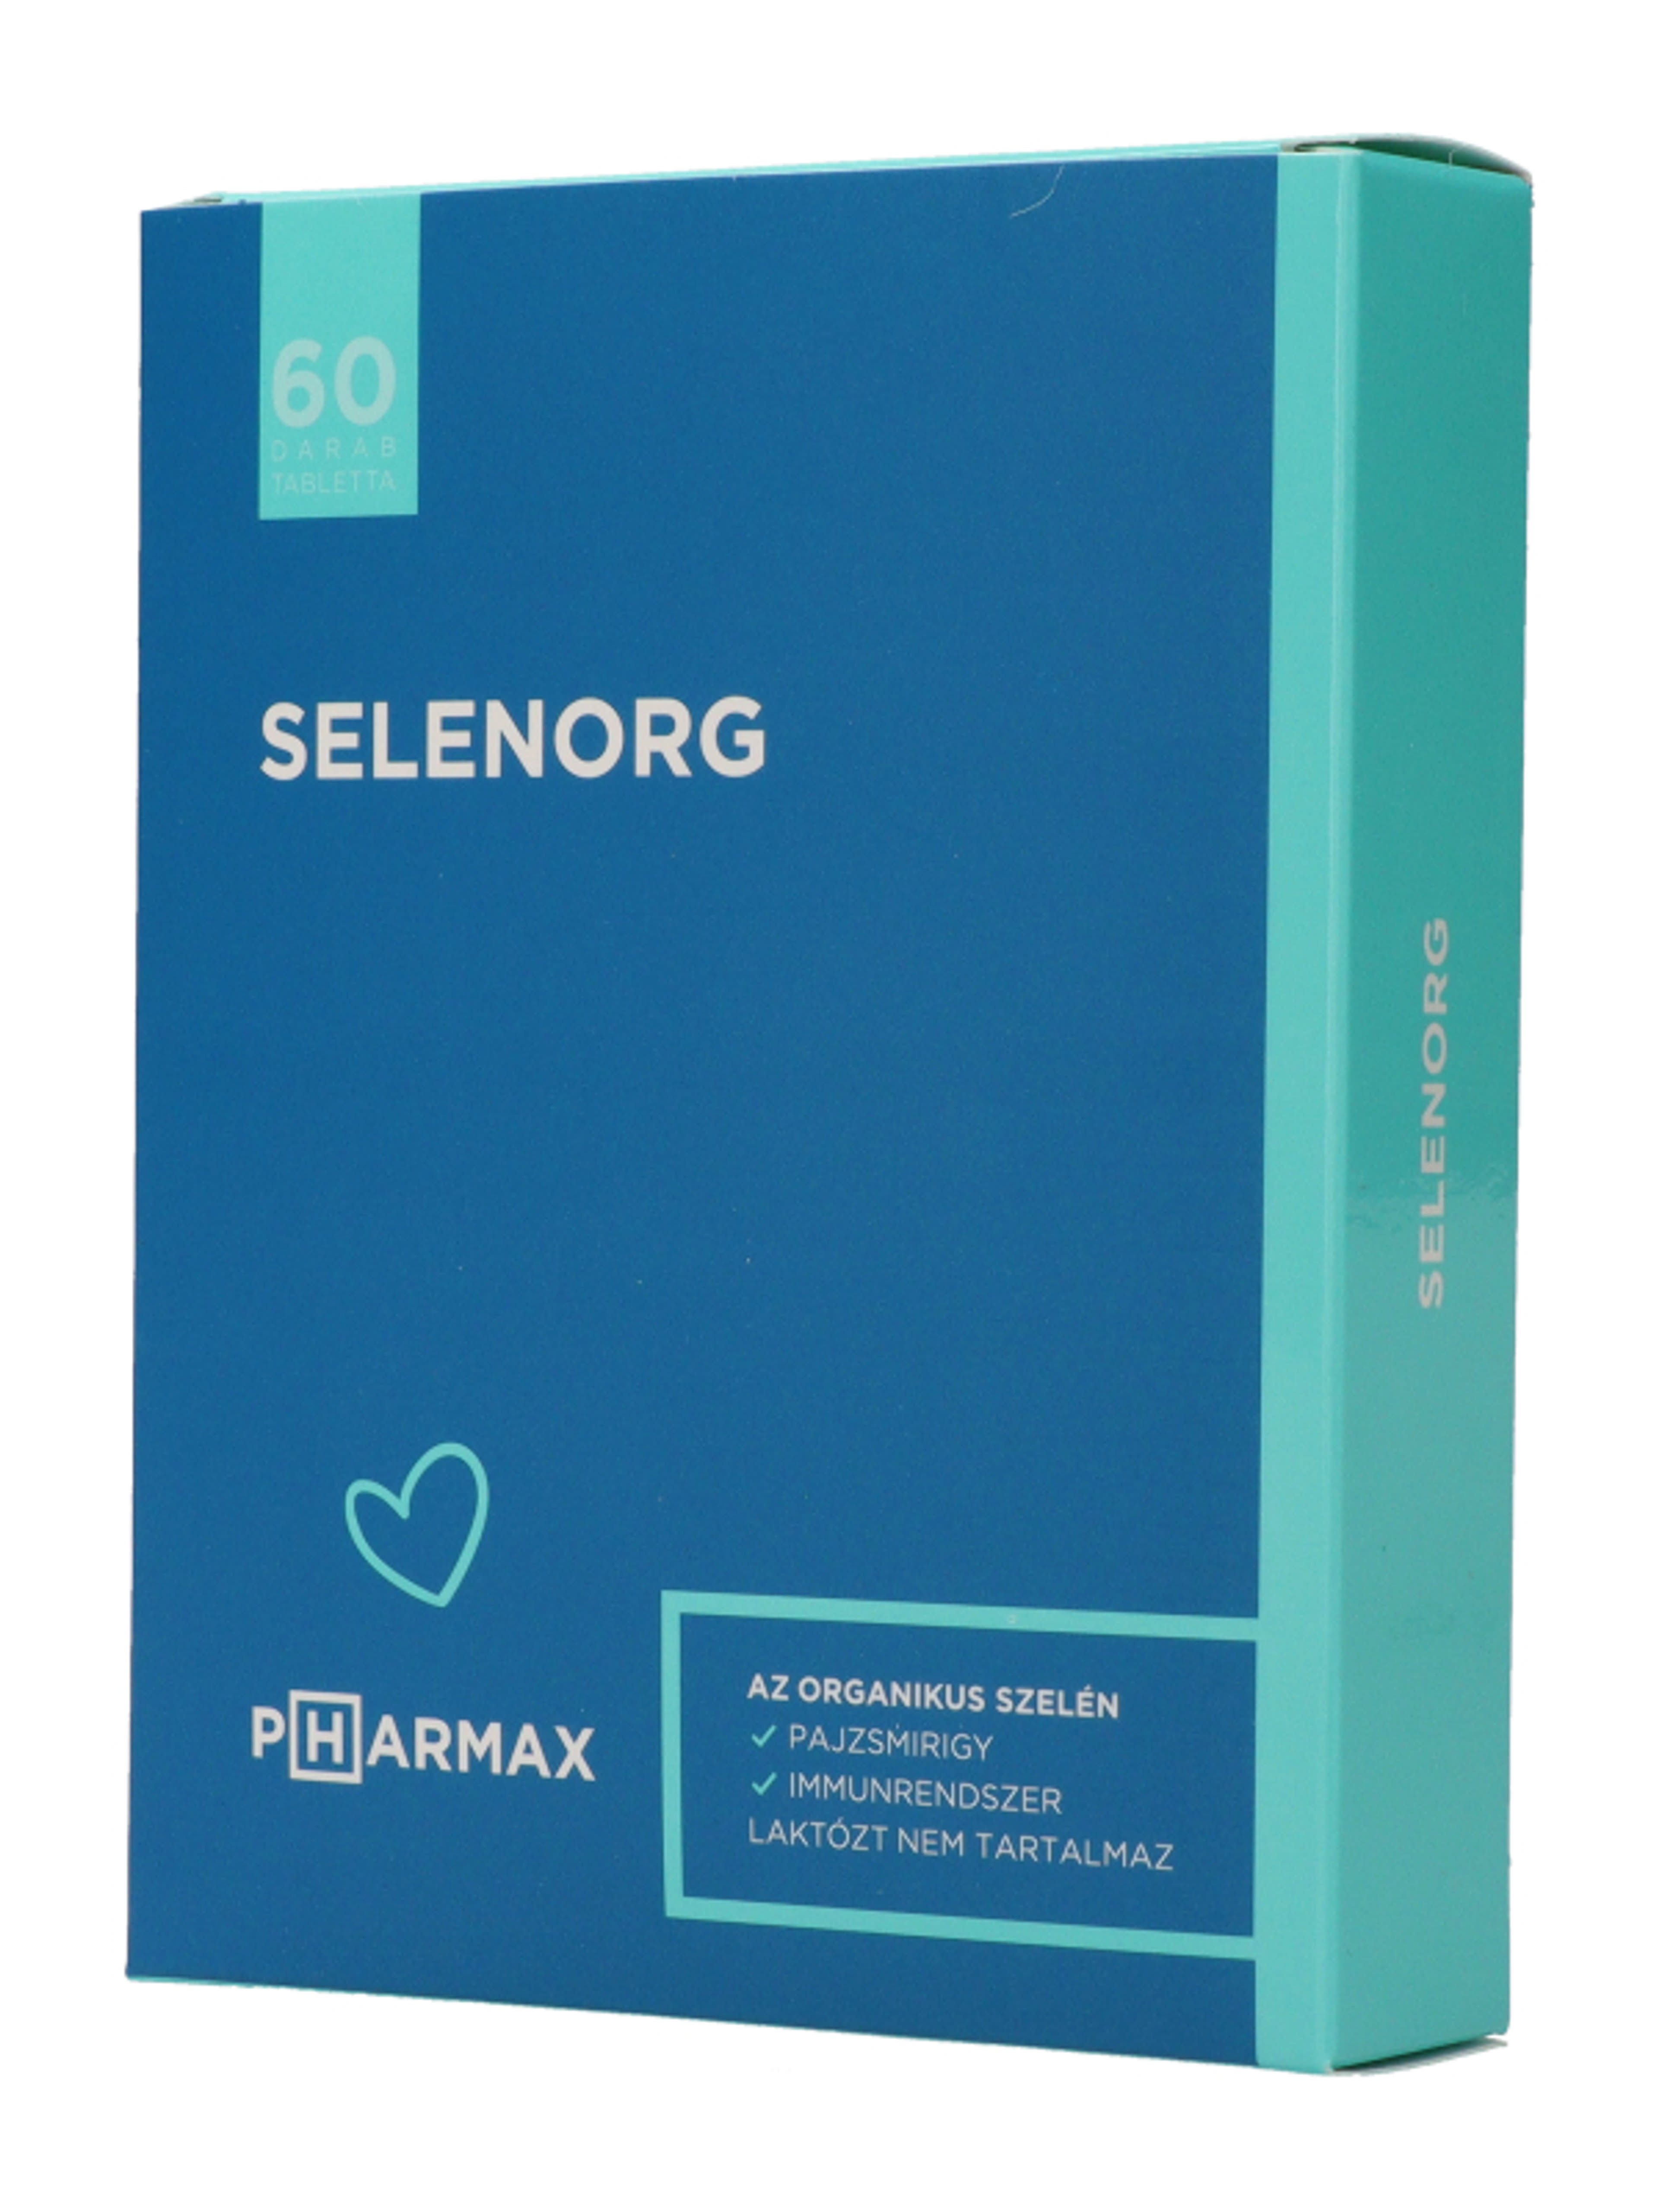 Pharmax Selenorg Tabletta - 60 db-3